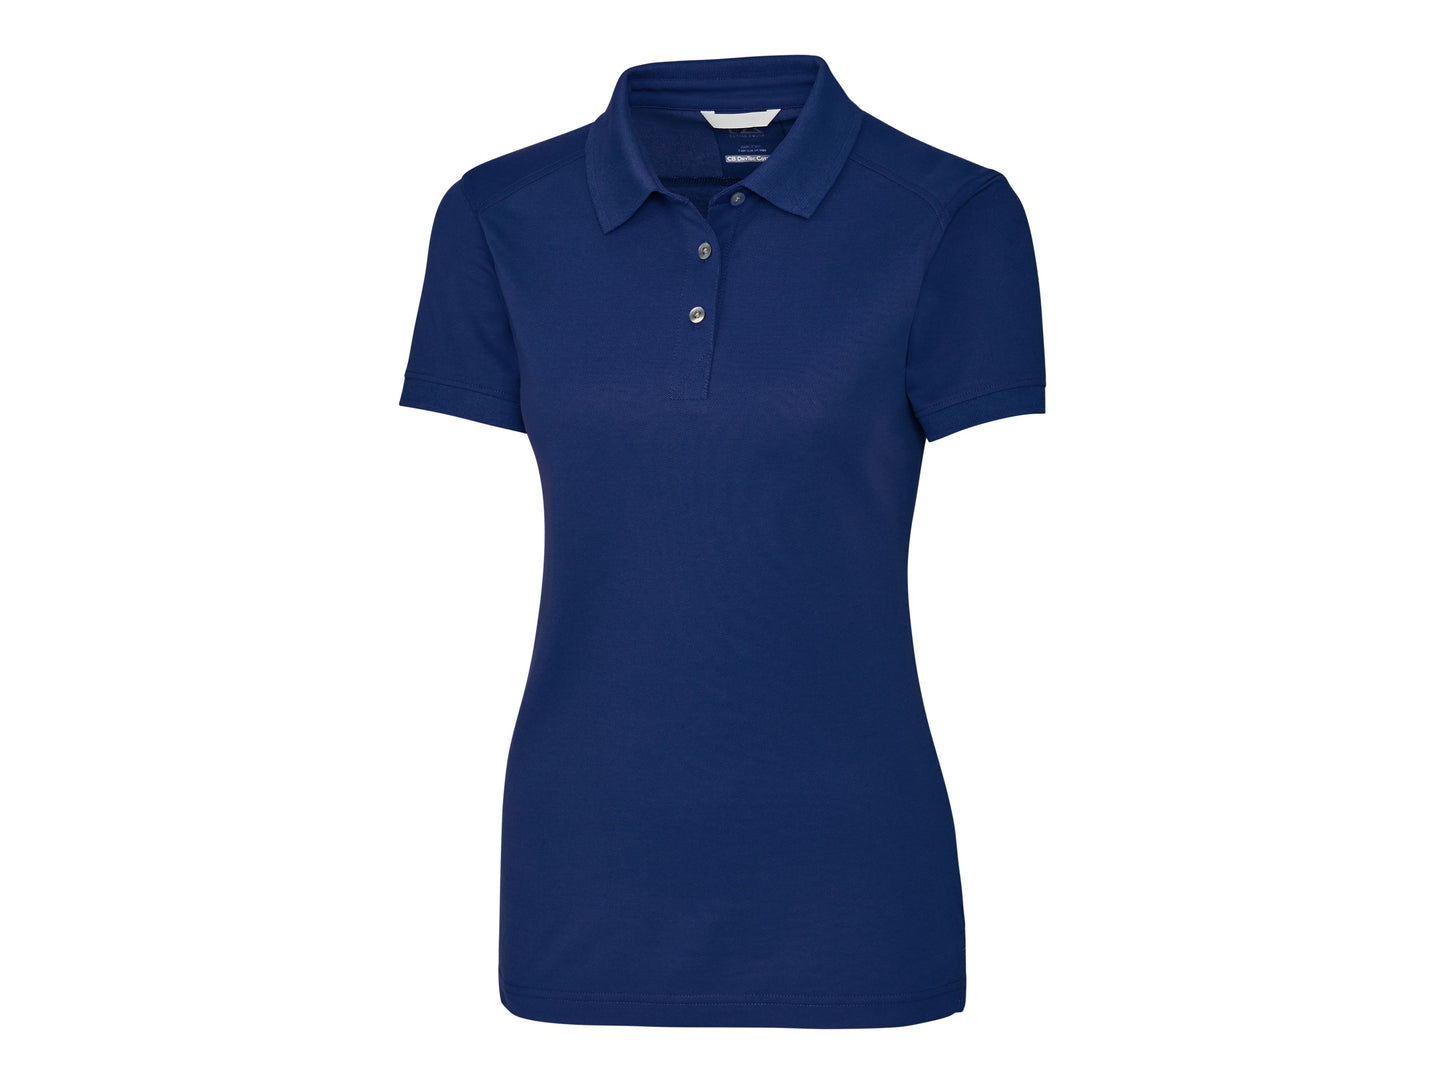 Cutter and Buck Shirts Advantage Polo (Women's Cut) - LCK08685 - Indigo